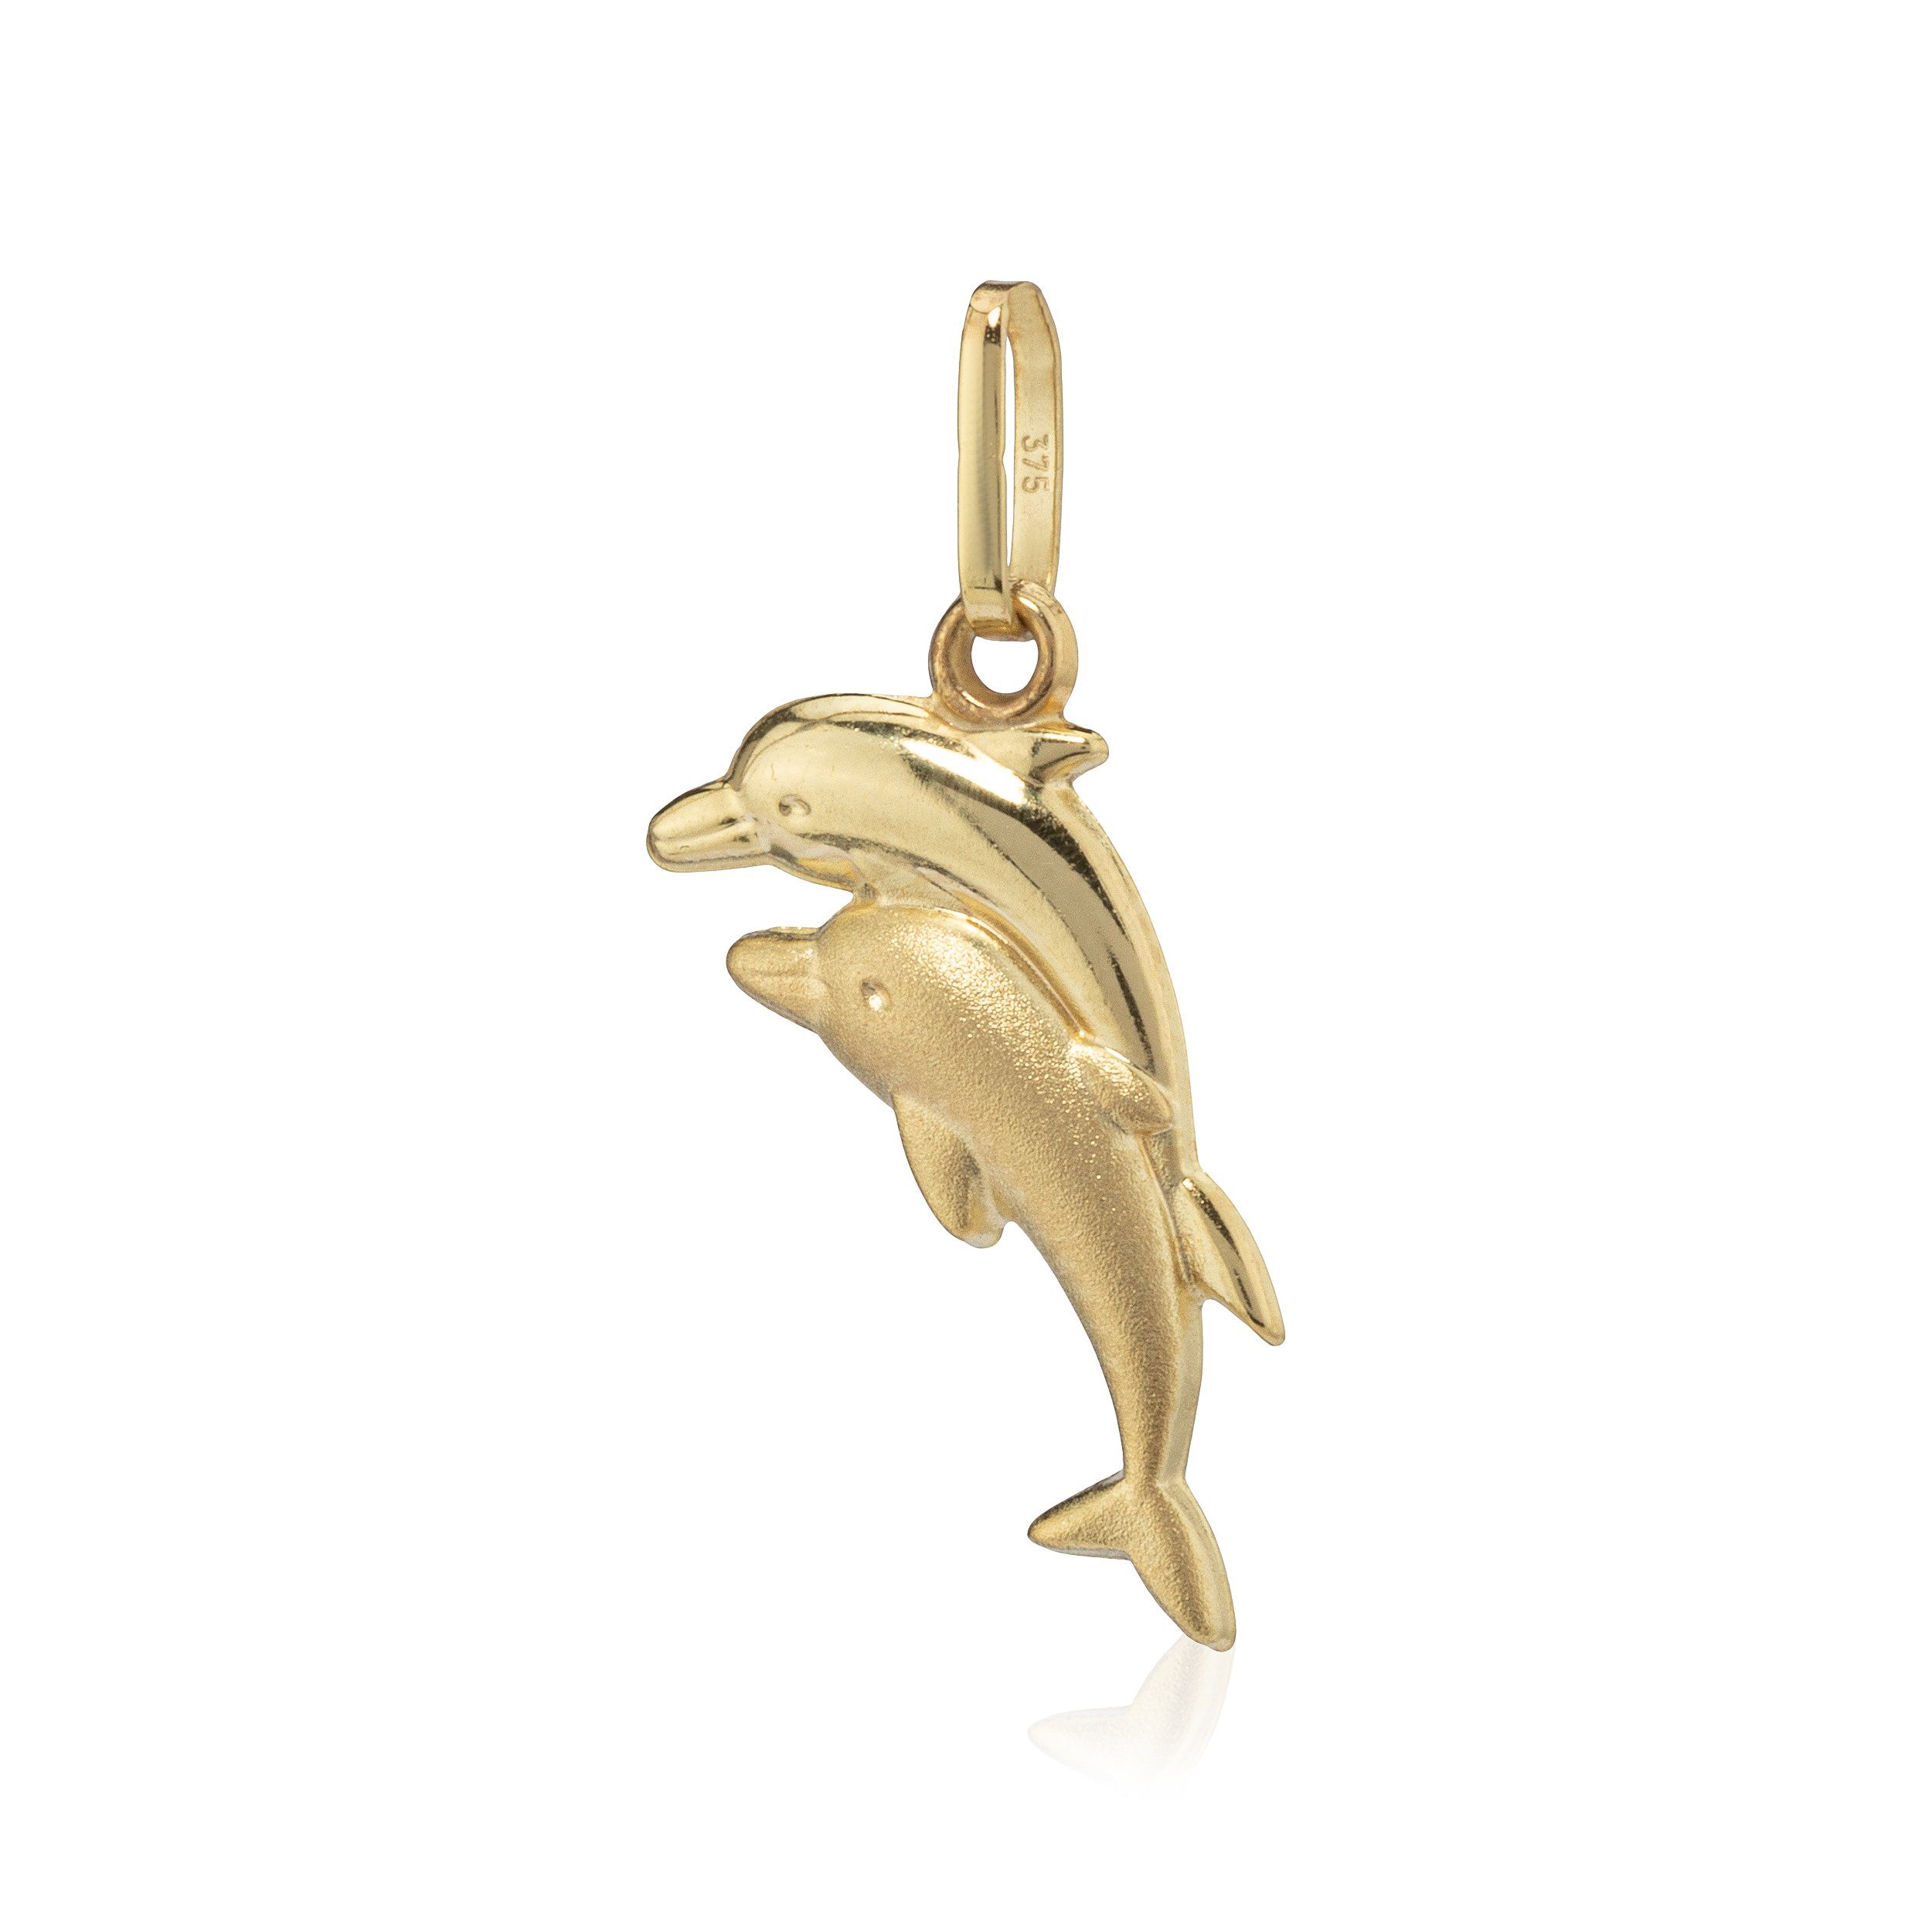 NKlaus Kettenanhänger Kettenanhänger Delfin klein 375 Gelb Gold Talisman